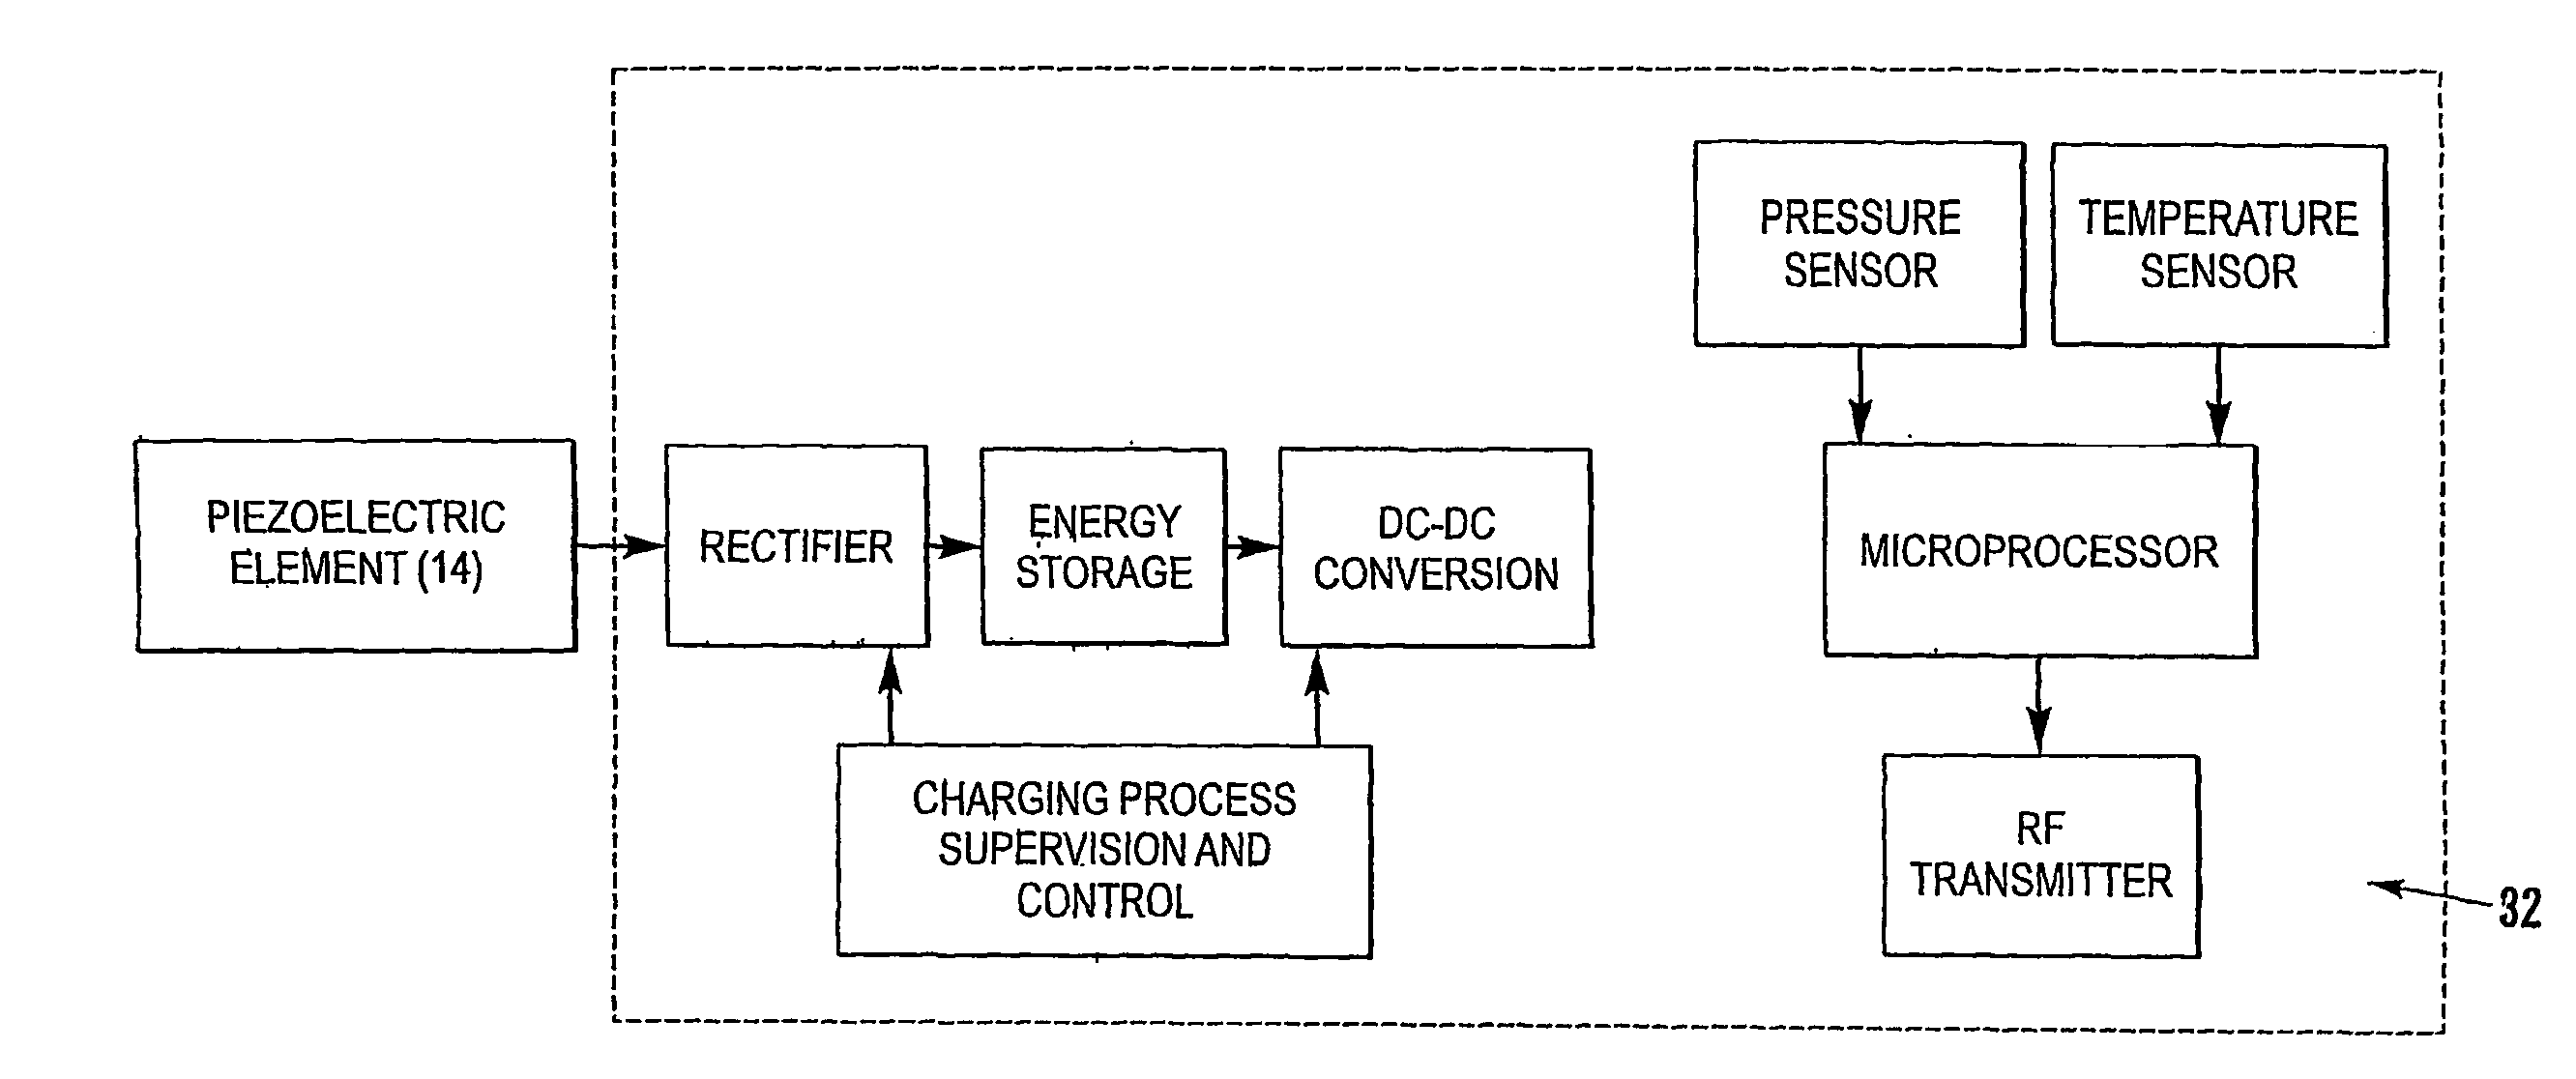 Power consumption protocol